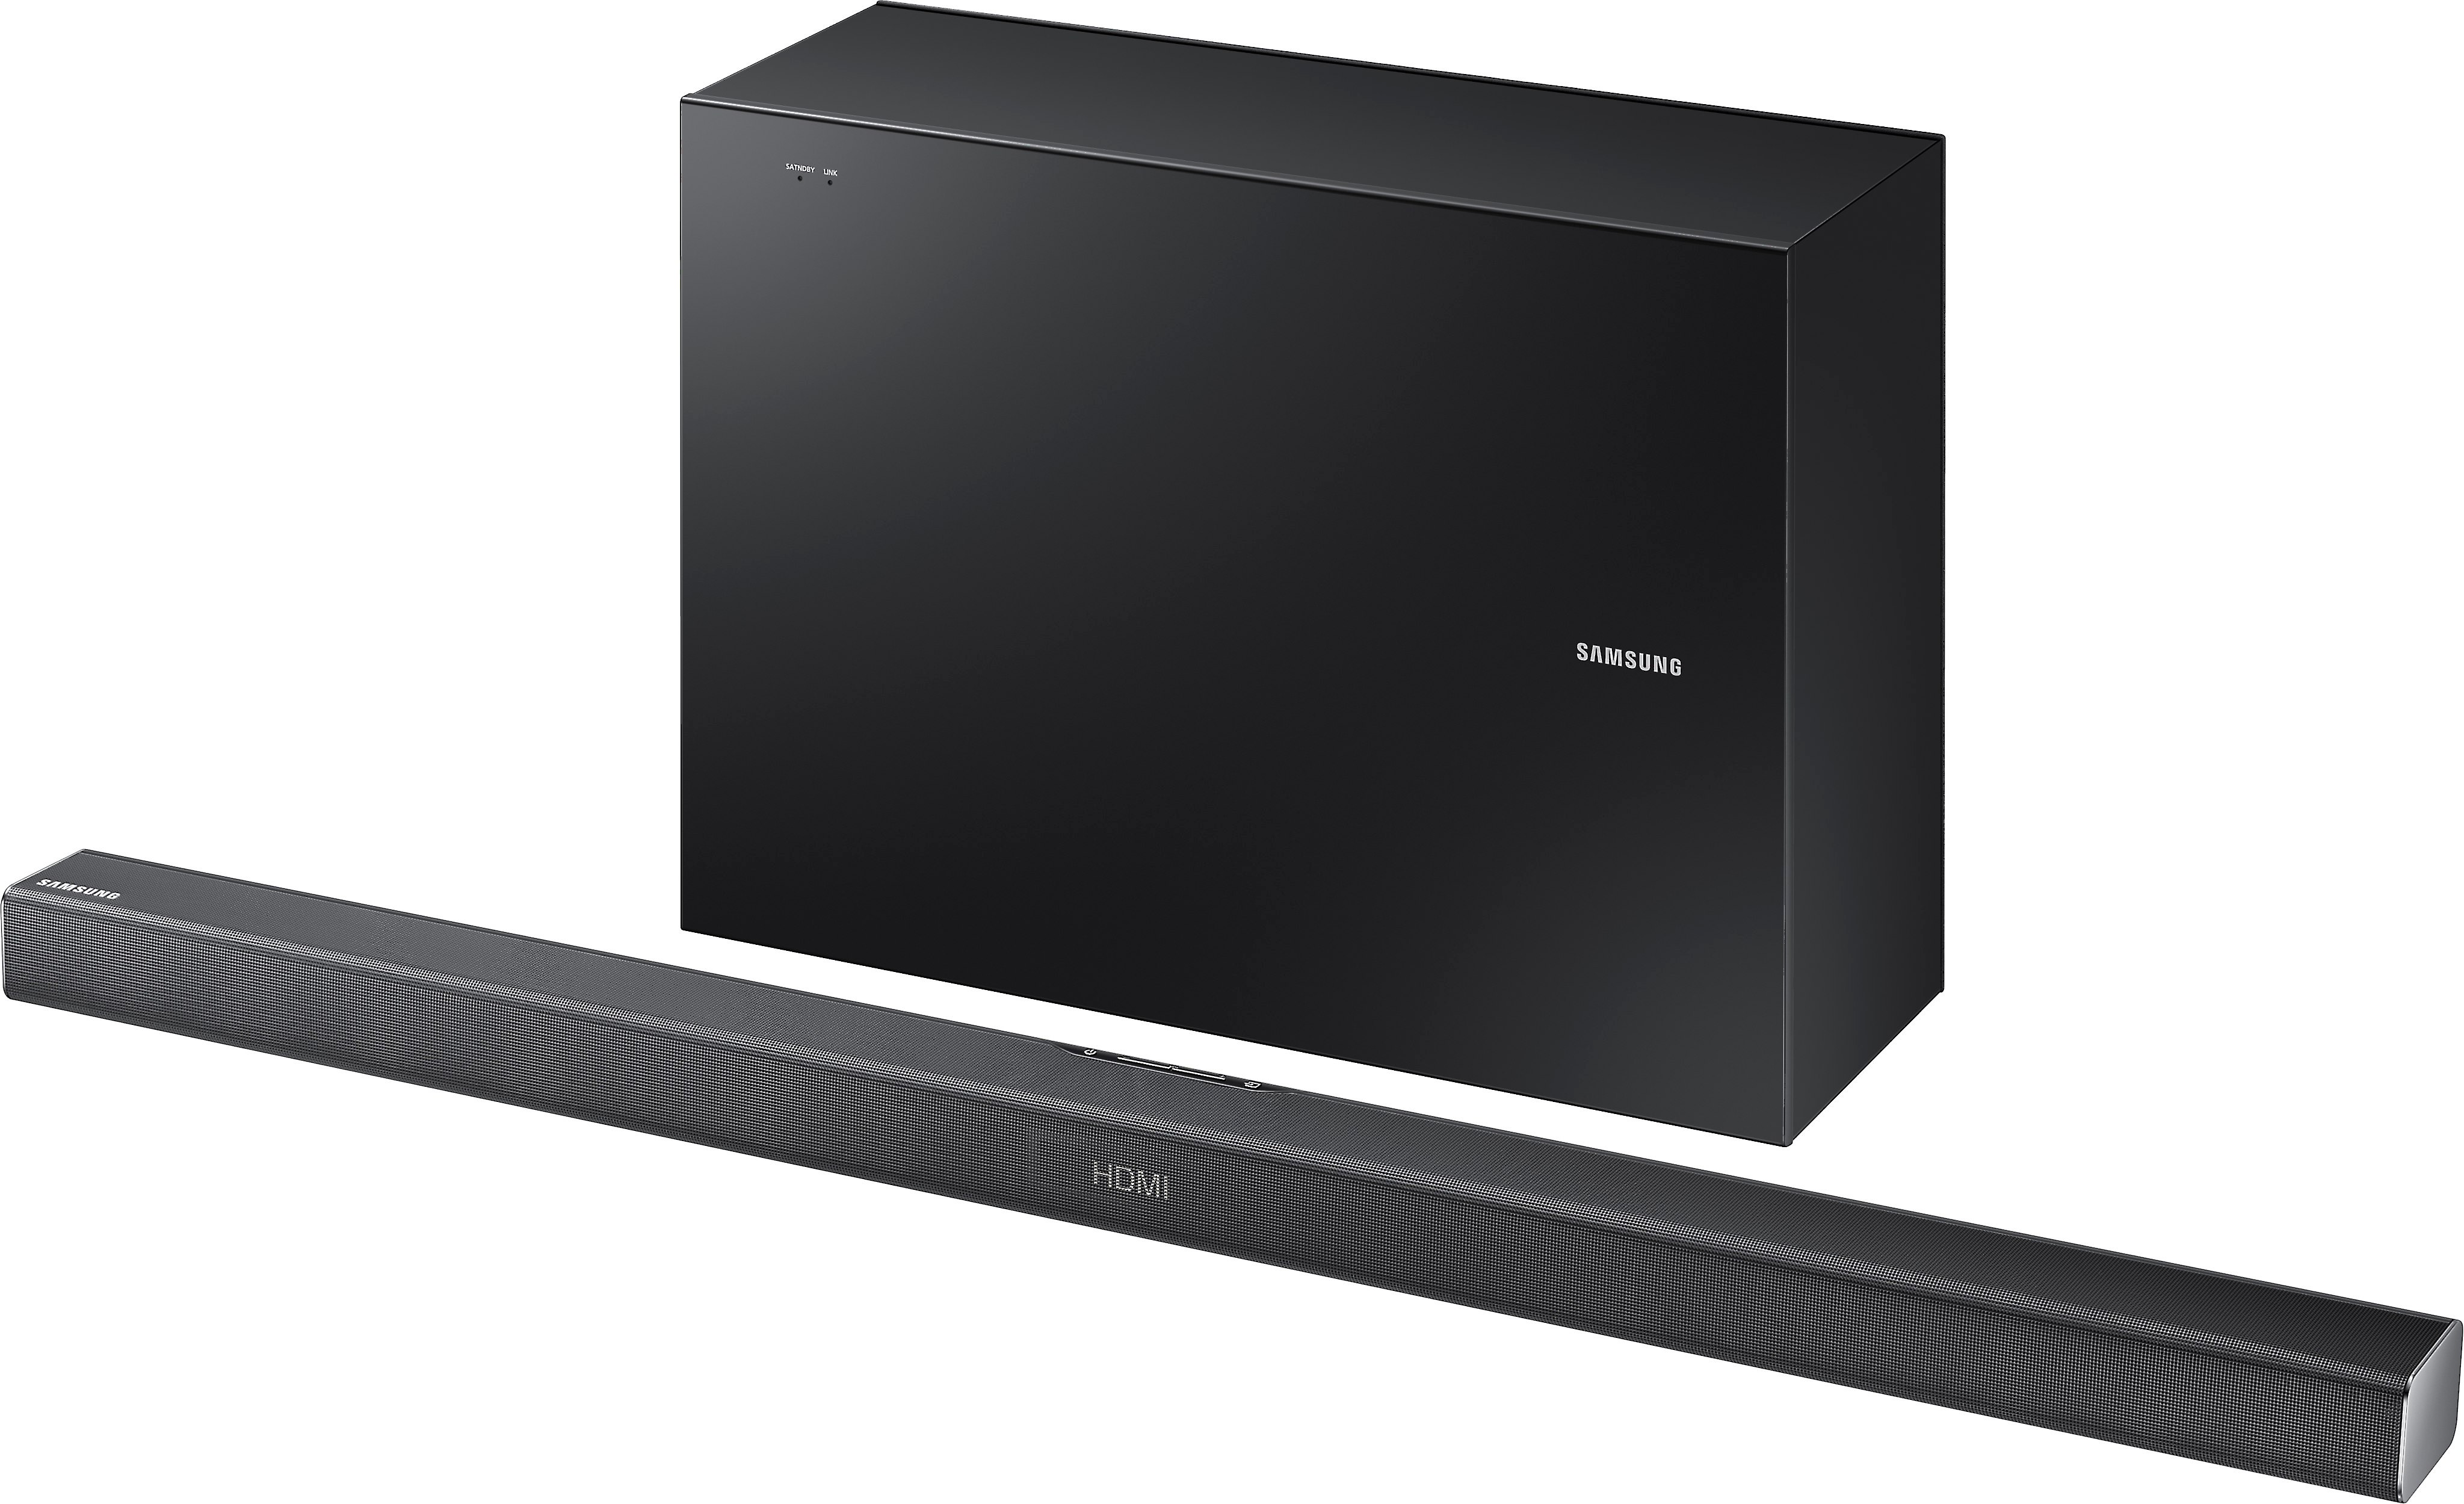 Samsung HW-J550 Powered home theater 